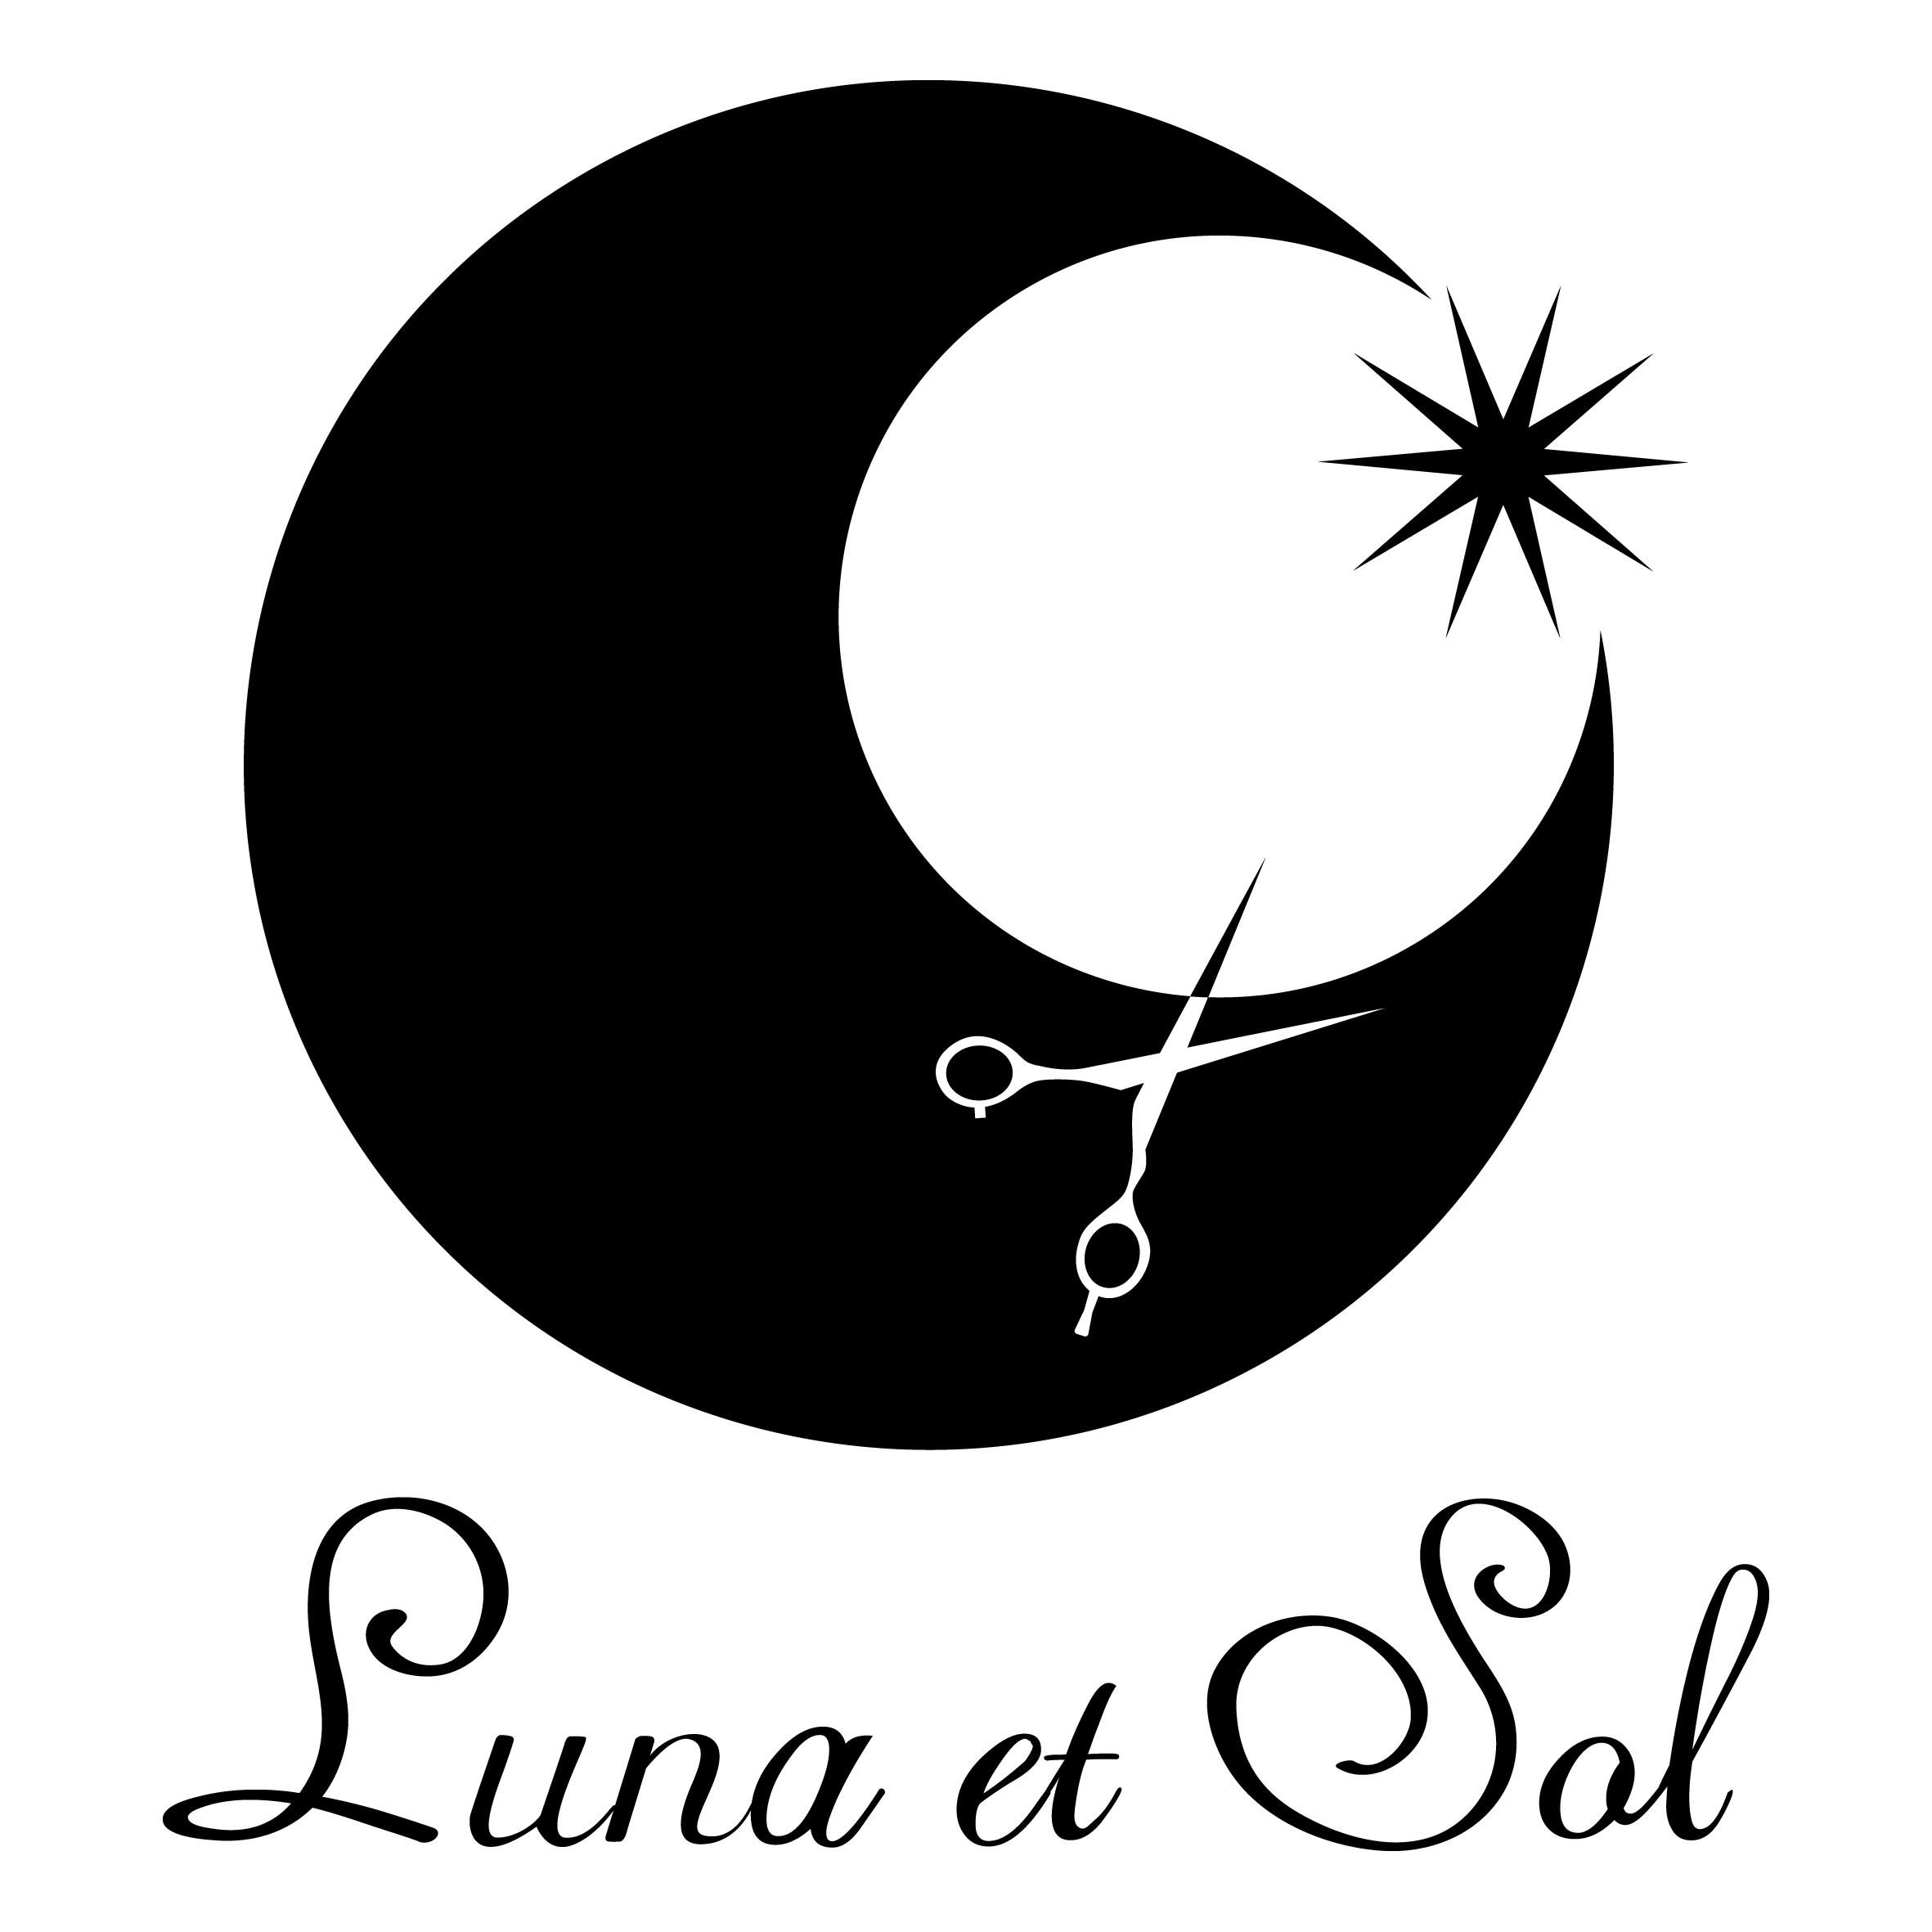 Luna et Sol 【ルナエソル】【ルナエソル】のスタイル紹介。【Luna et Sol】style5